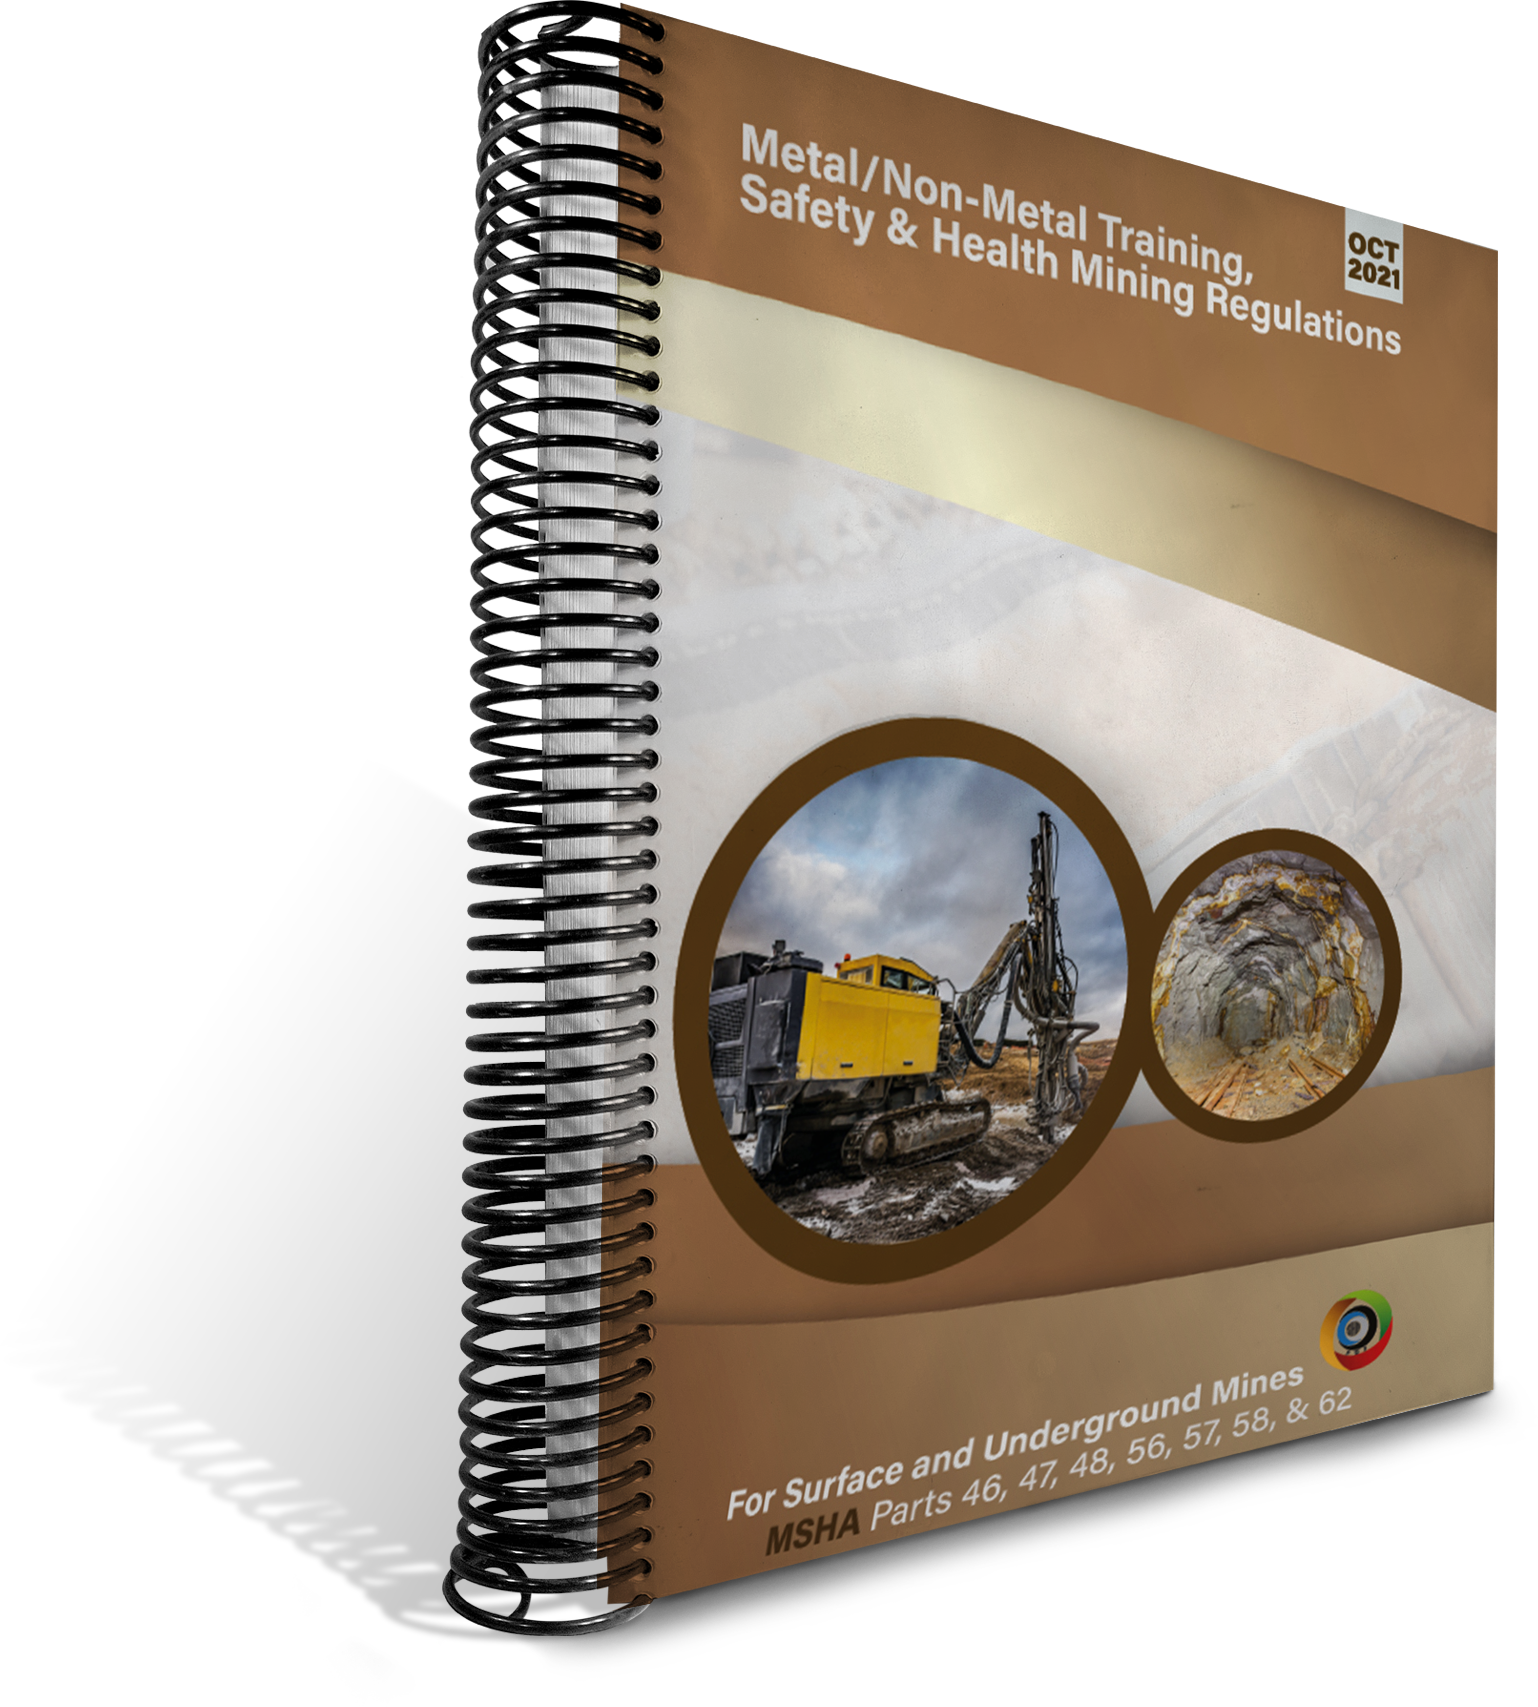 Metal/Nonmetal Training Mine Safety & Health Regulations: Title 30 MSHA Parts 46-48 & 56-58 & 62 - Pocket Guide - October 2021